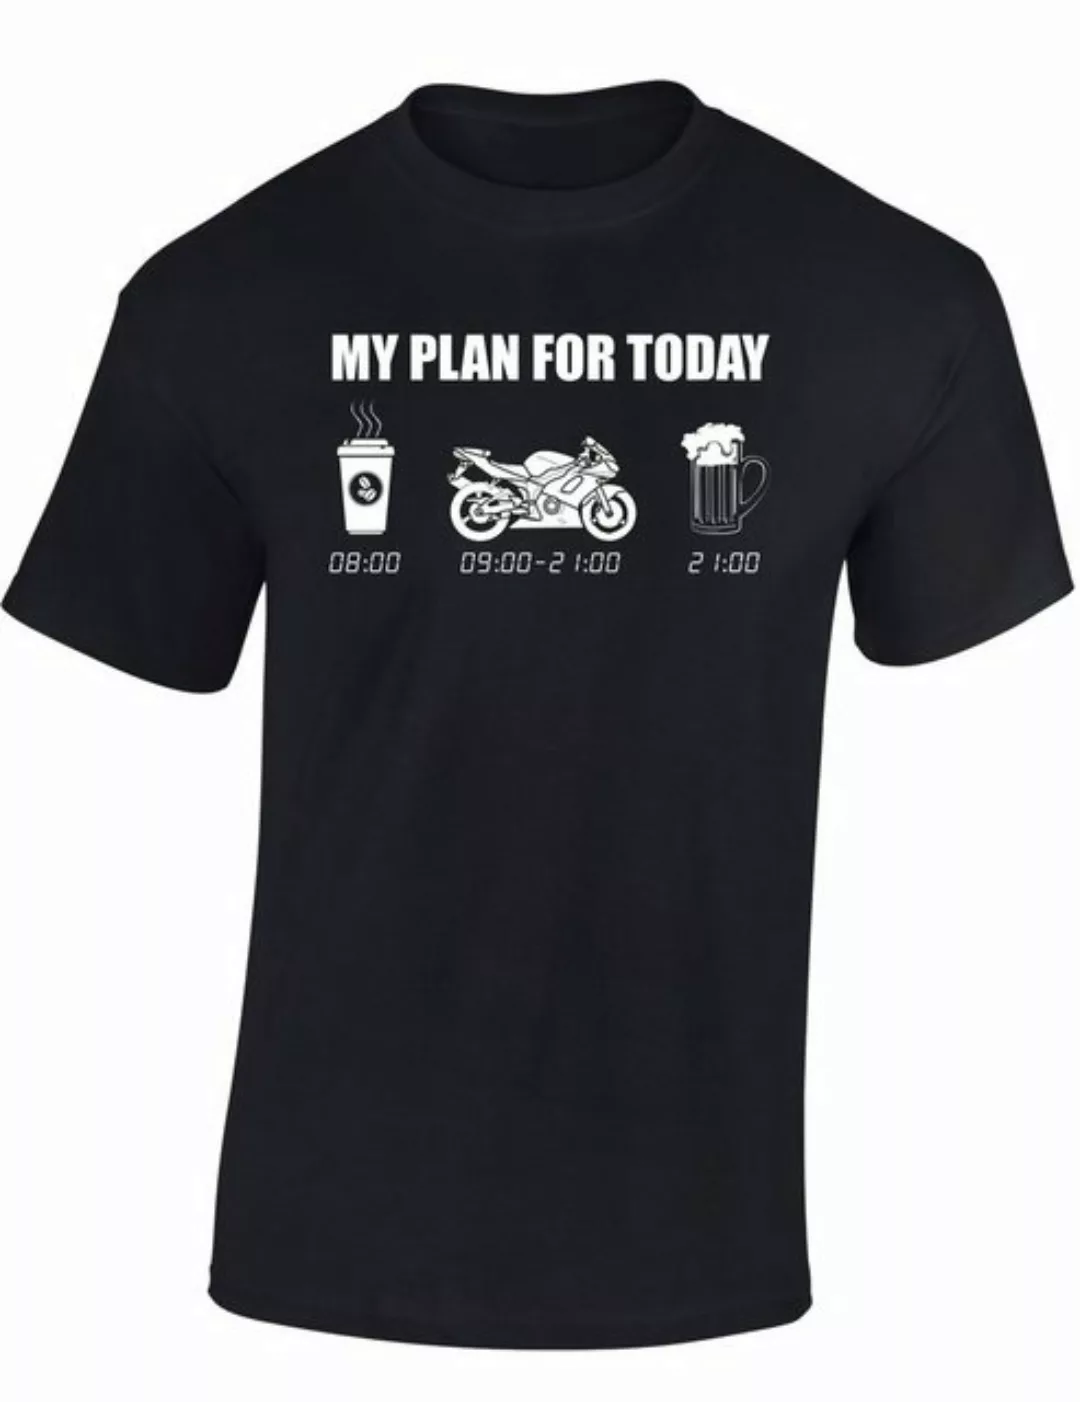 Baddery Print-Shirt Biker T-Shirt, "My plan for today - Motorrad", hochwert günstig online kaufen